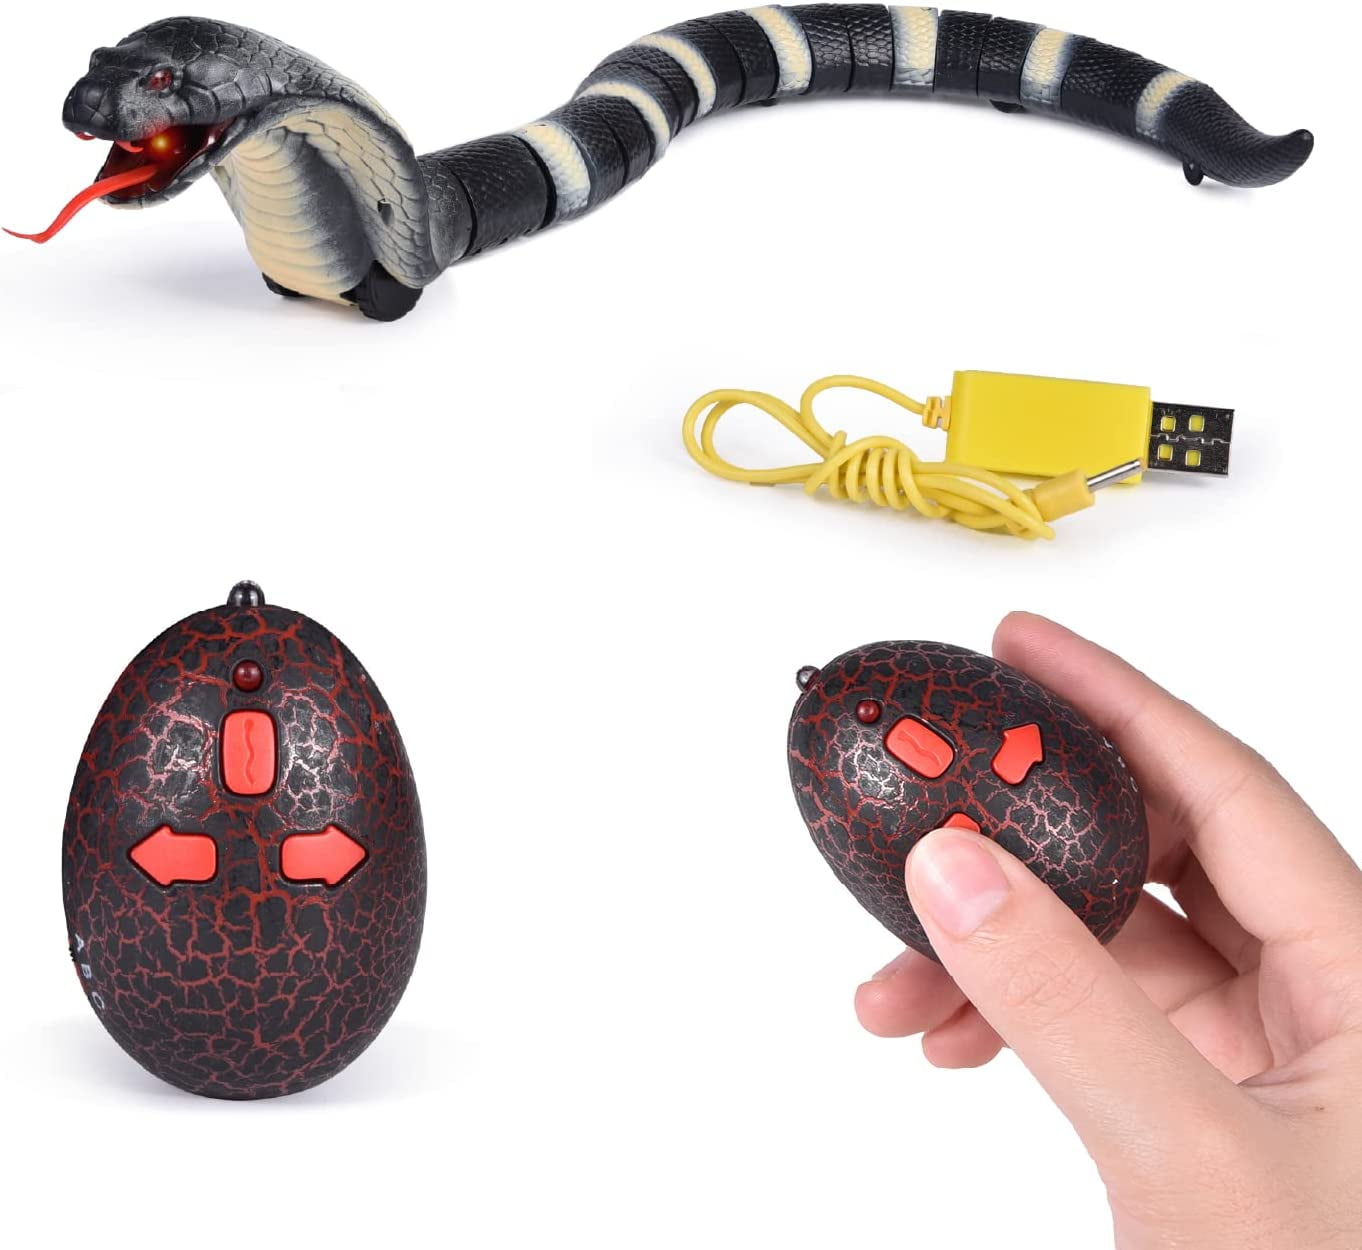 Smart Sensing Interactive Cat Toys Snake Eletrônico Automático, Teasering  Play, USB Recarregável, Kitten Toys for Cats and Dogs - AliExpress